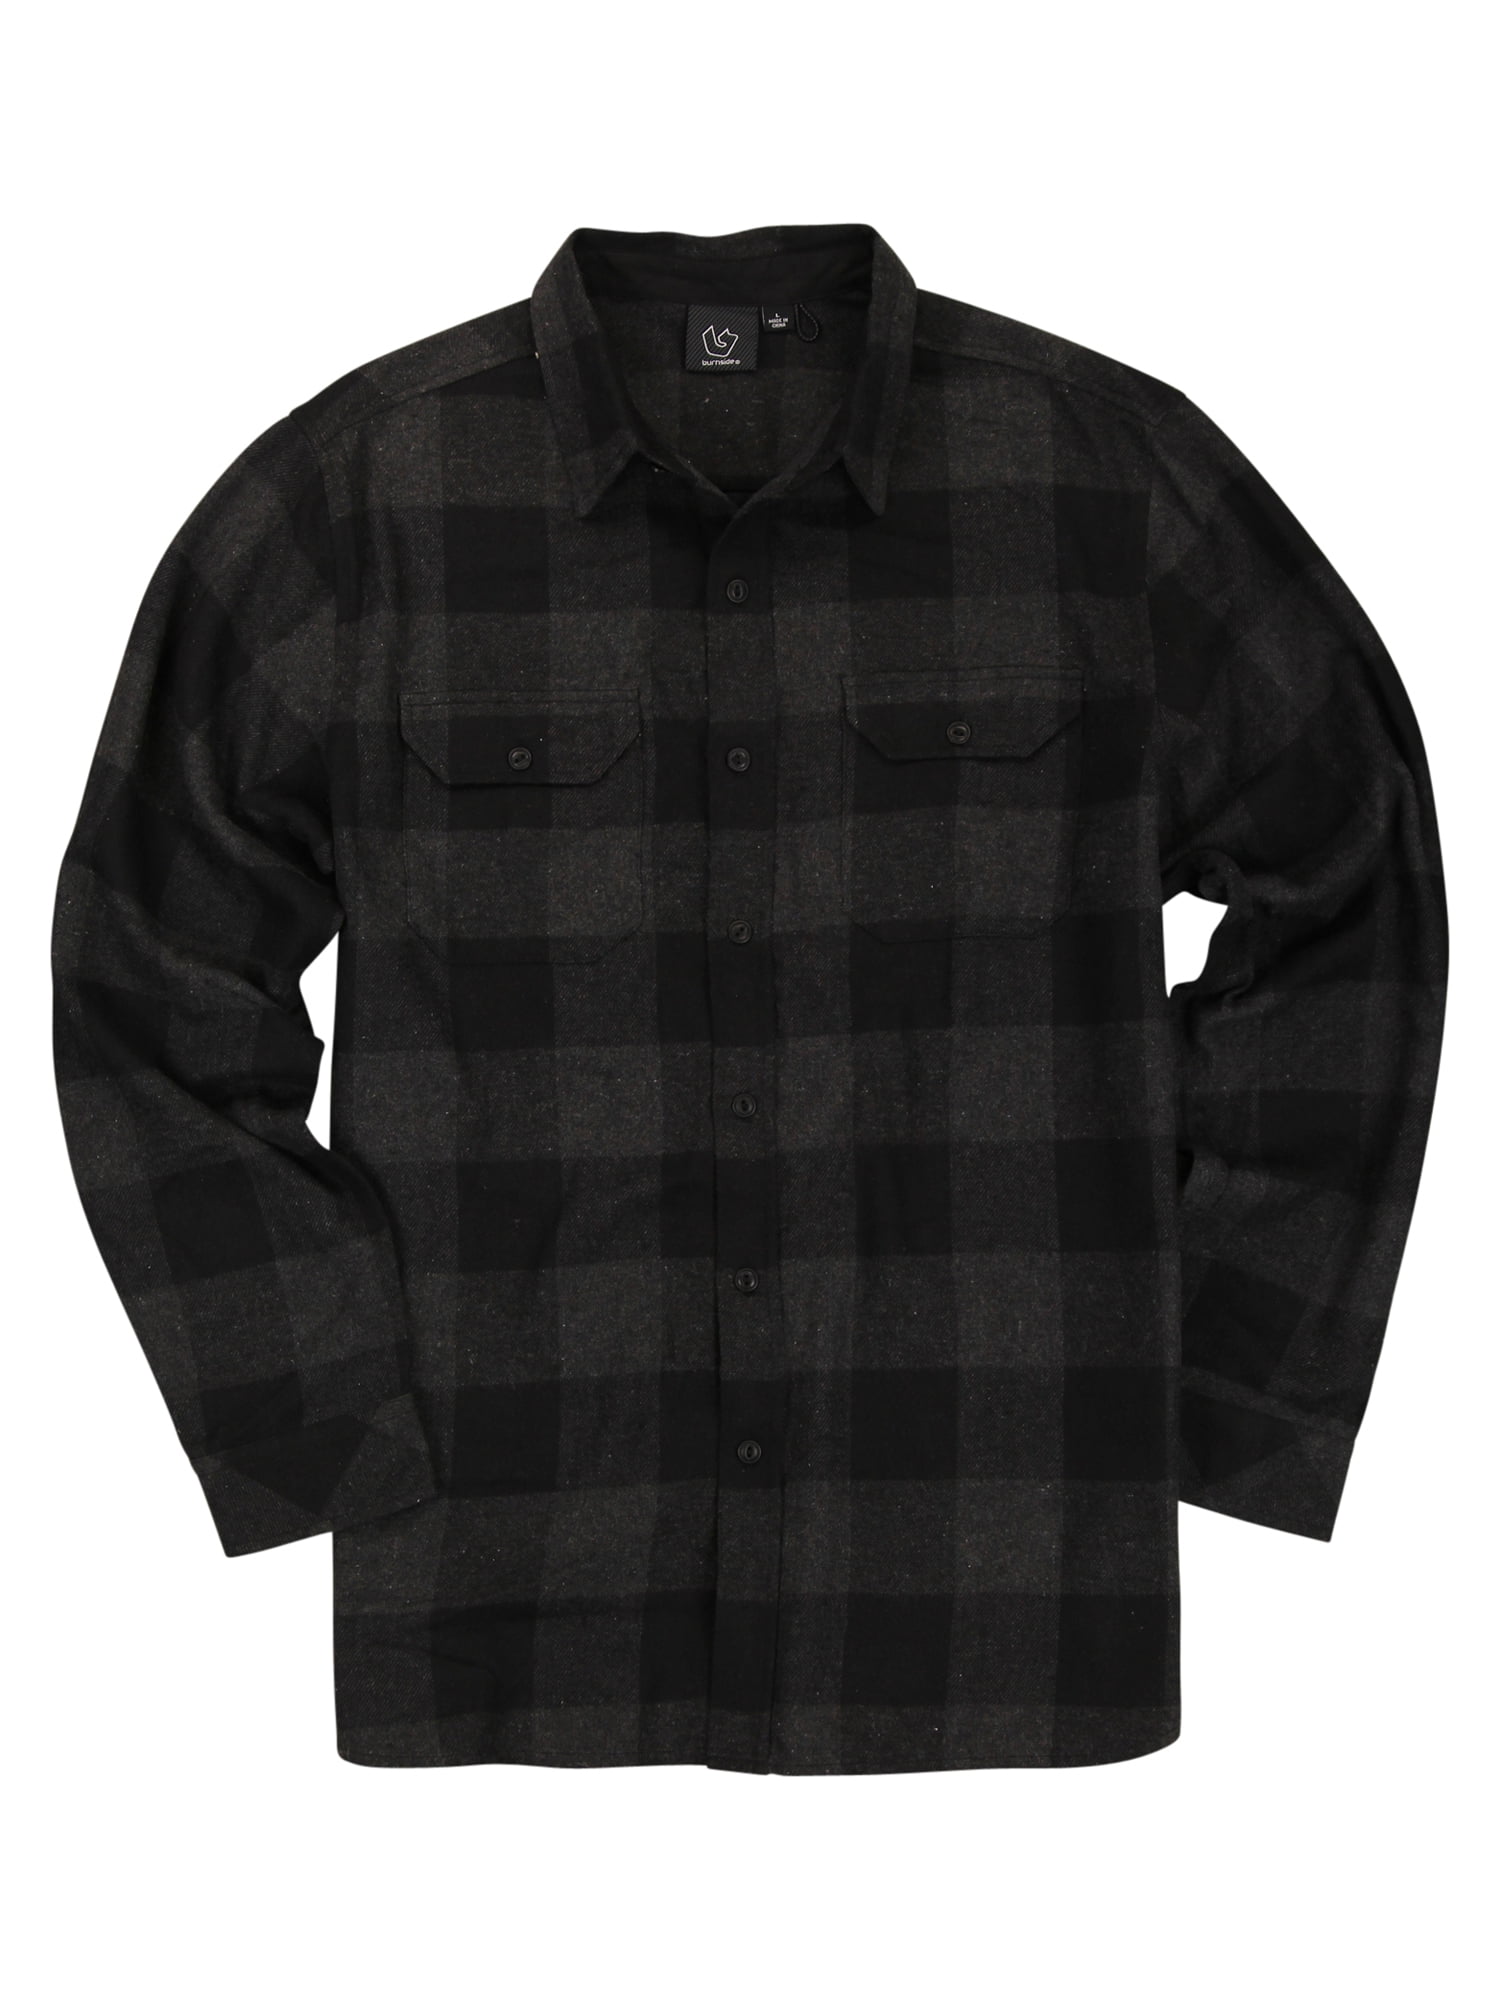 (BW8281) Down (Black, Large) Shirt Sleeve Long Button Men\'s Flannel